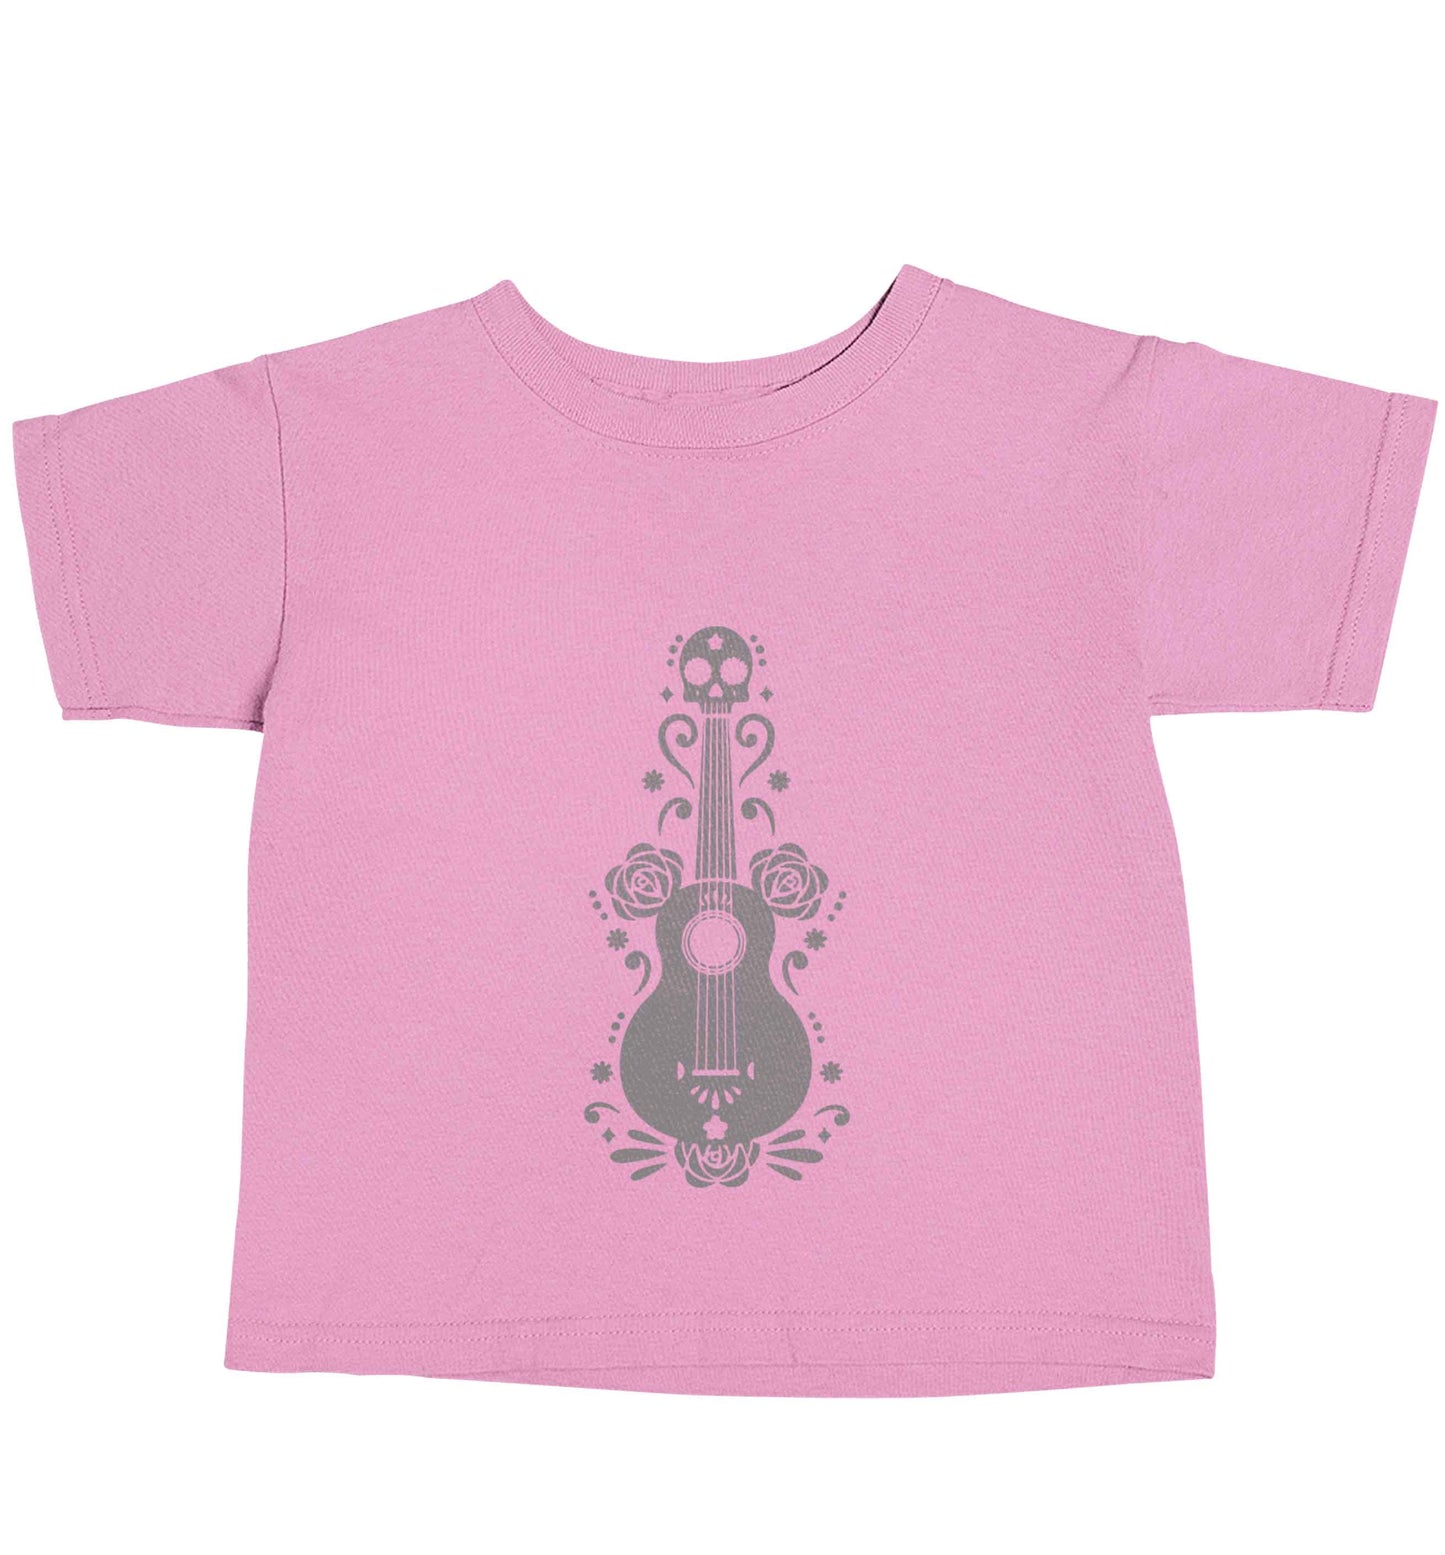 Guitar skull illustration light pink baby toddler Tshirt 2 Years